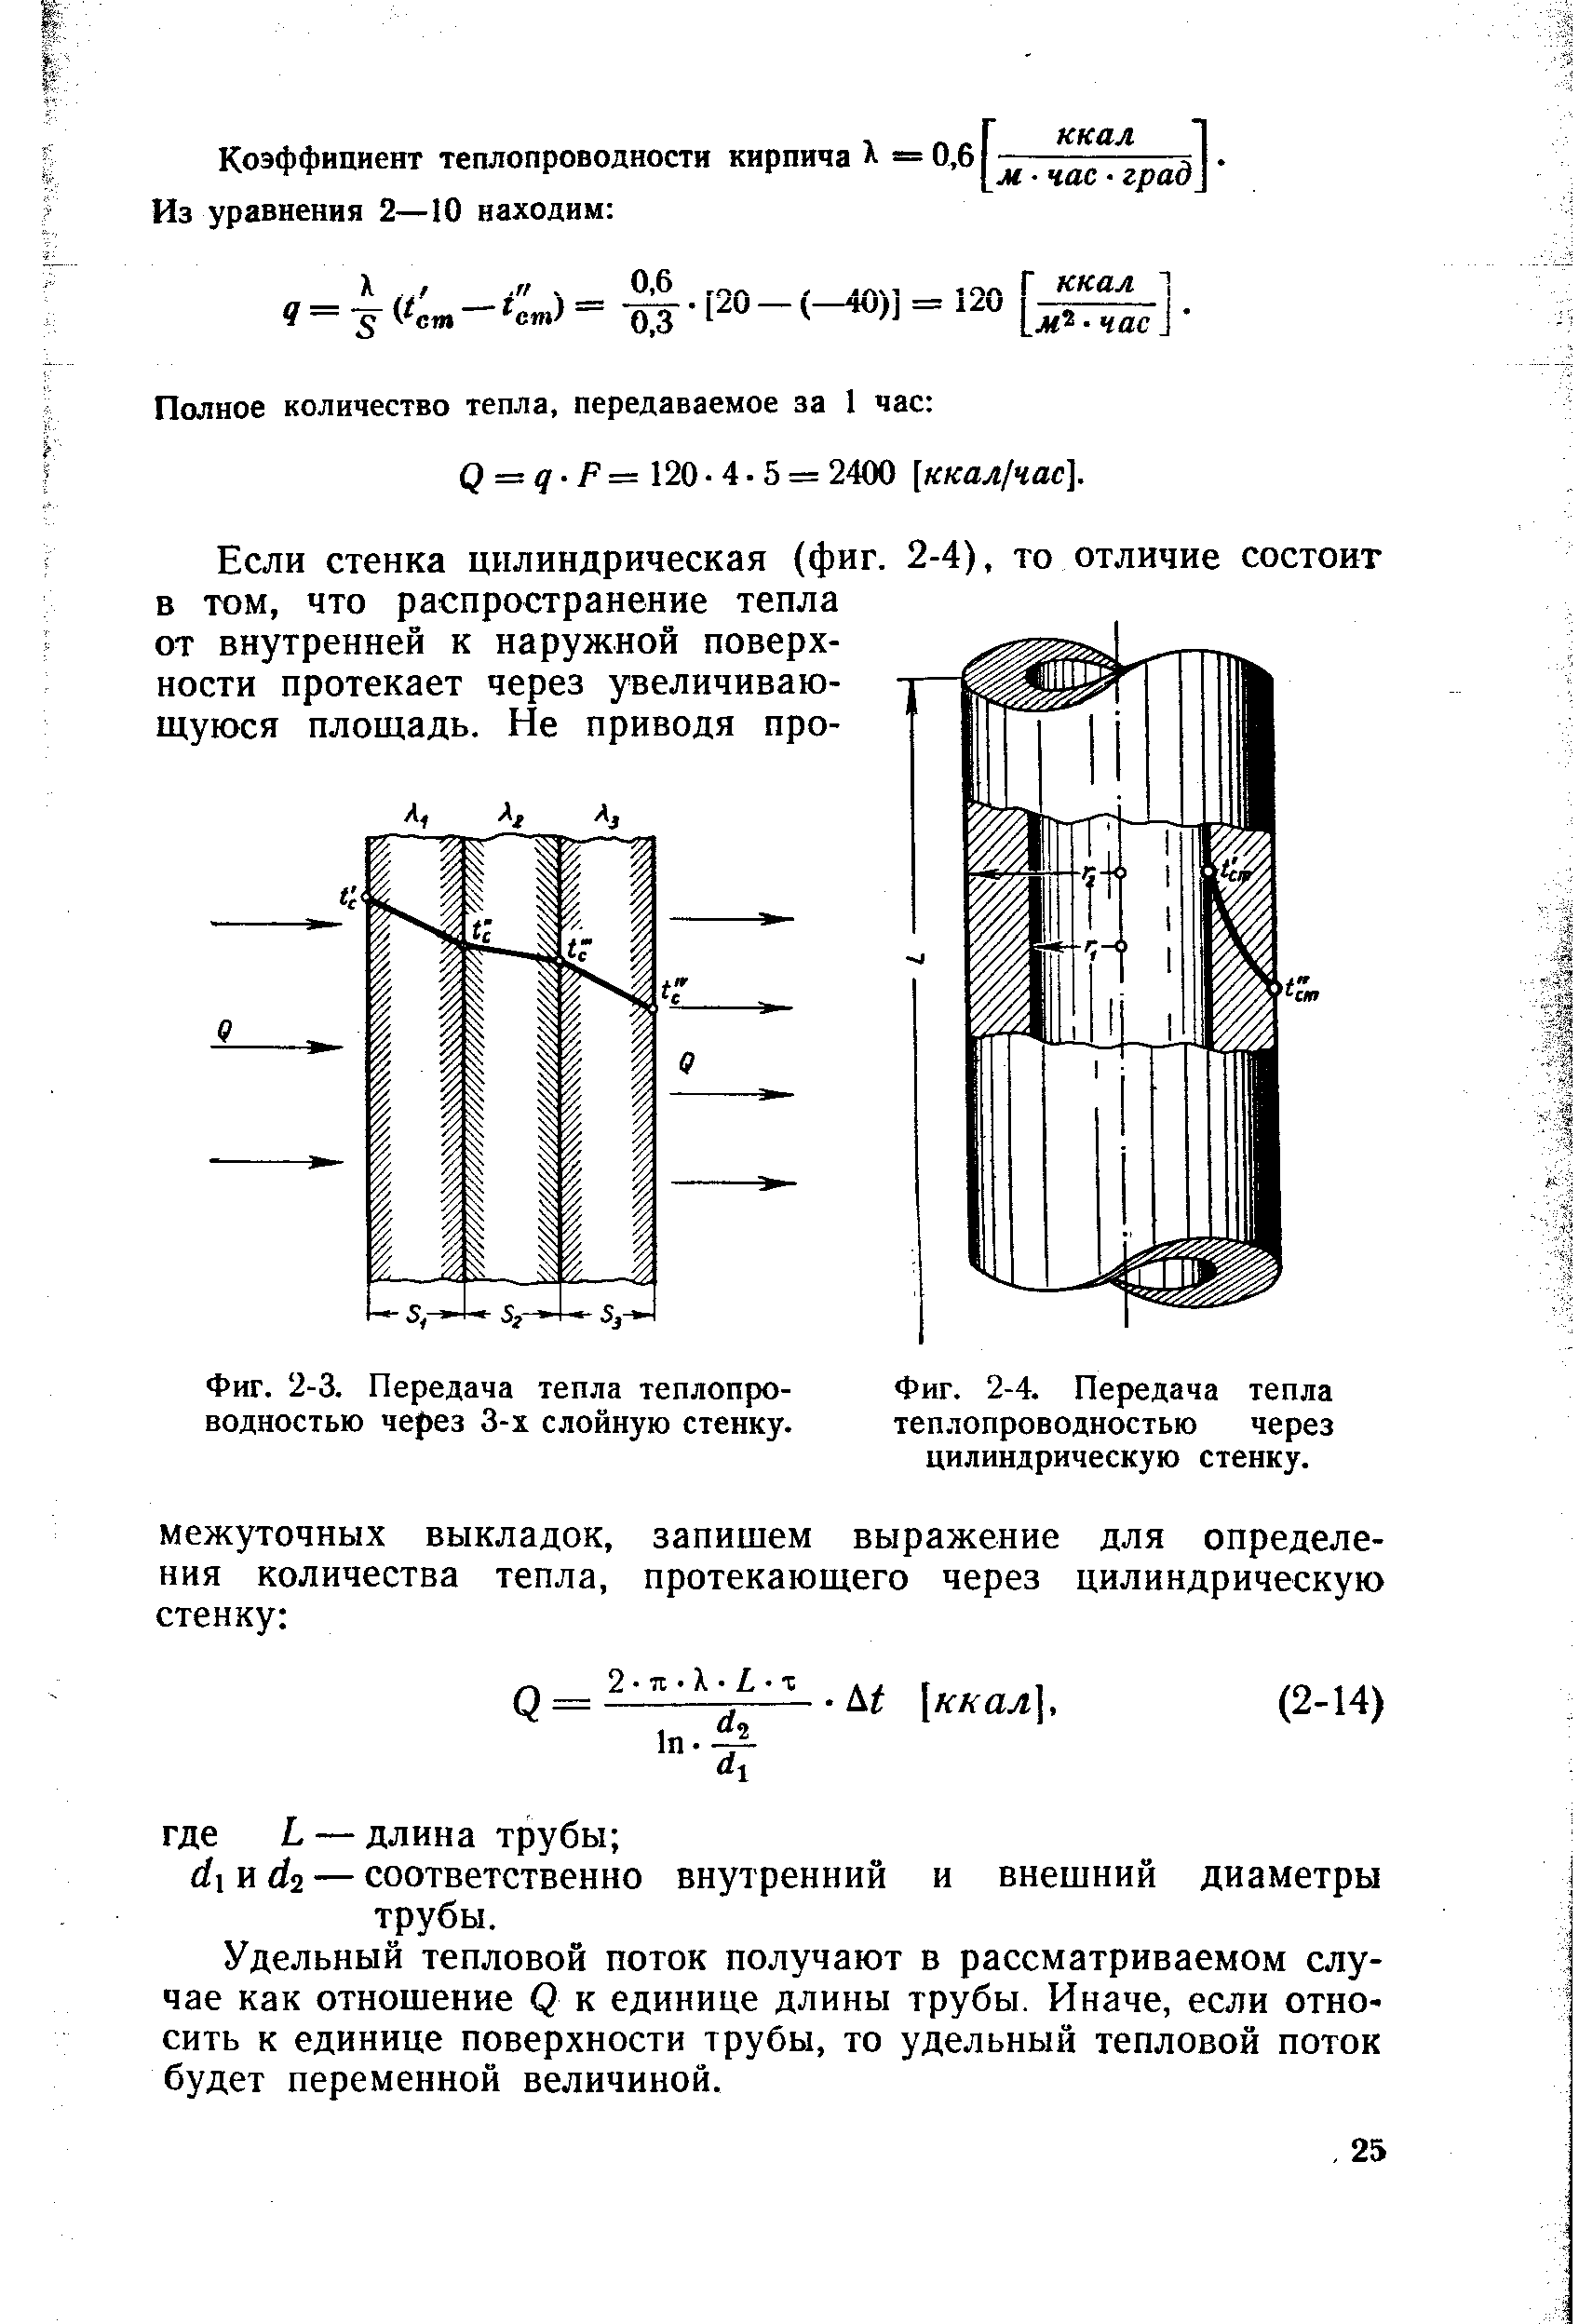 Фиг. 2-4. <a href="/info/302707">Передача тепла теплопроводностью</a> через цилиндрическую стенку.
